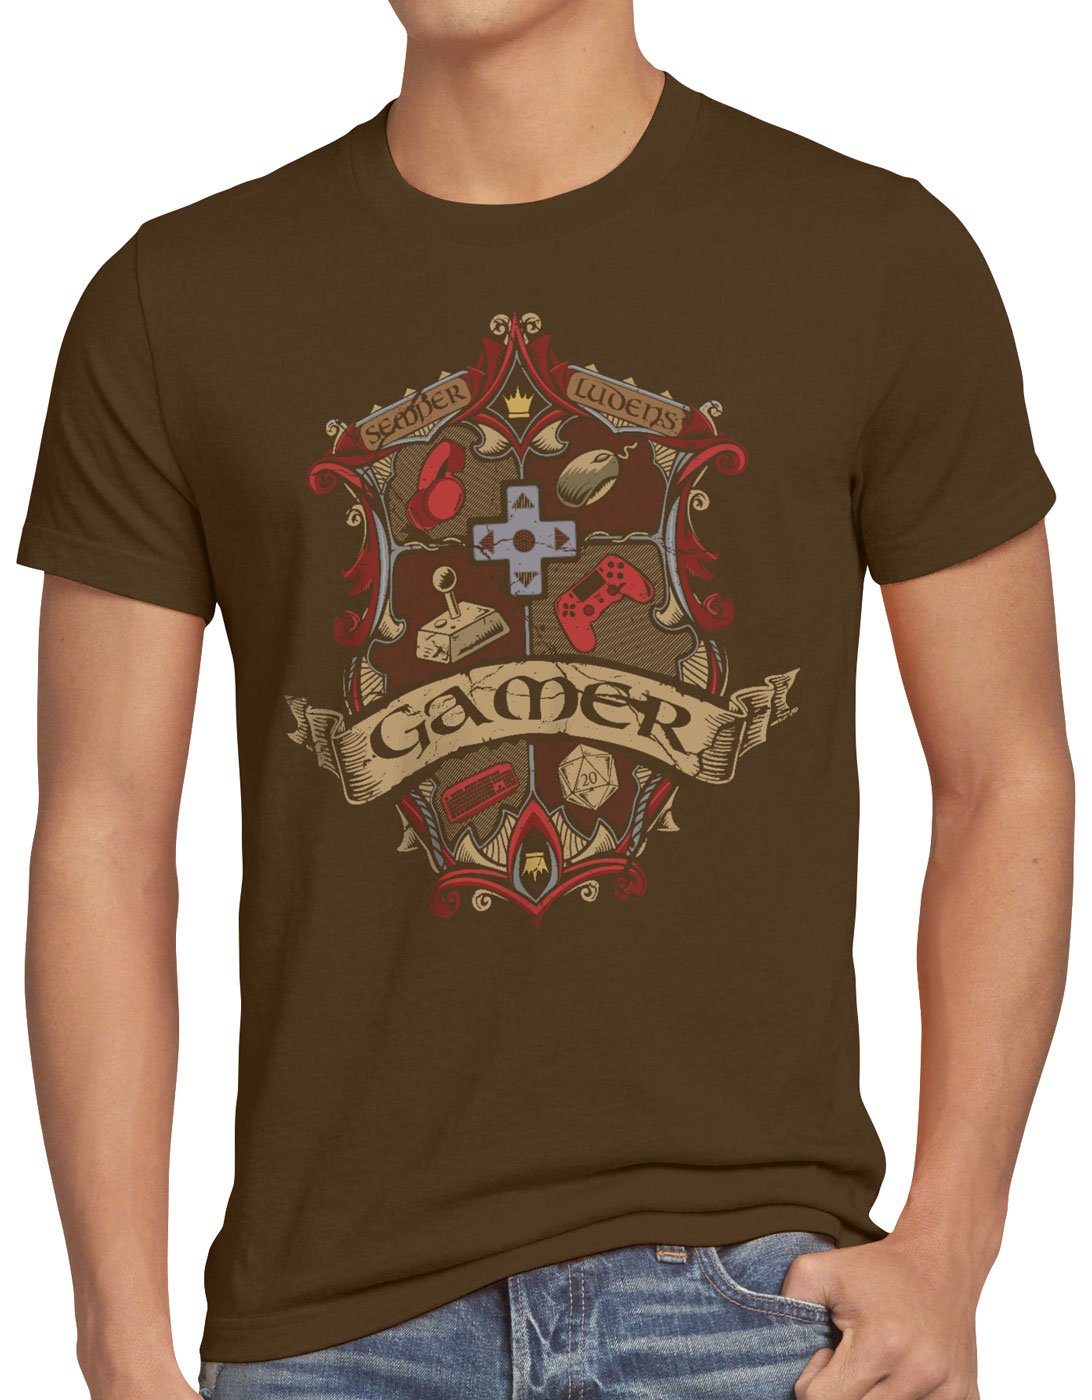 T-Shirt Herren Wappen style3 spieleabend Print-Shirt gesellschaftsspiel Gamer braun